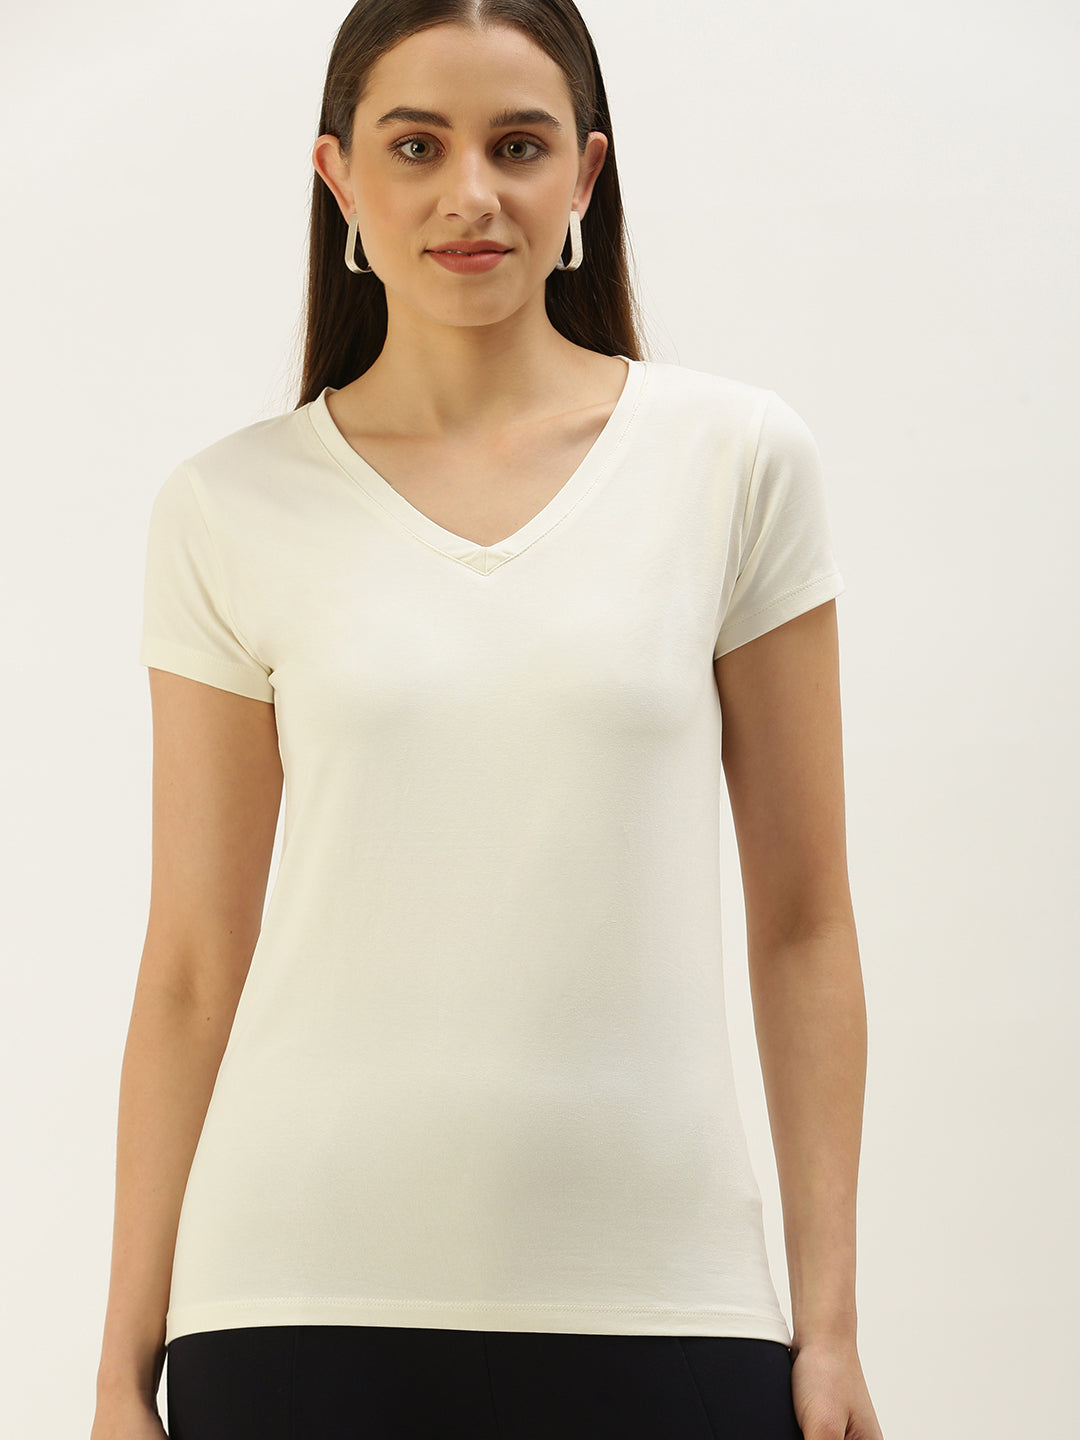 De Moza Women's Half Sleeve Top Off White